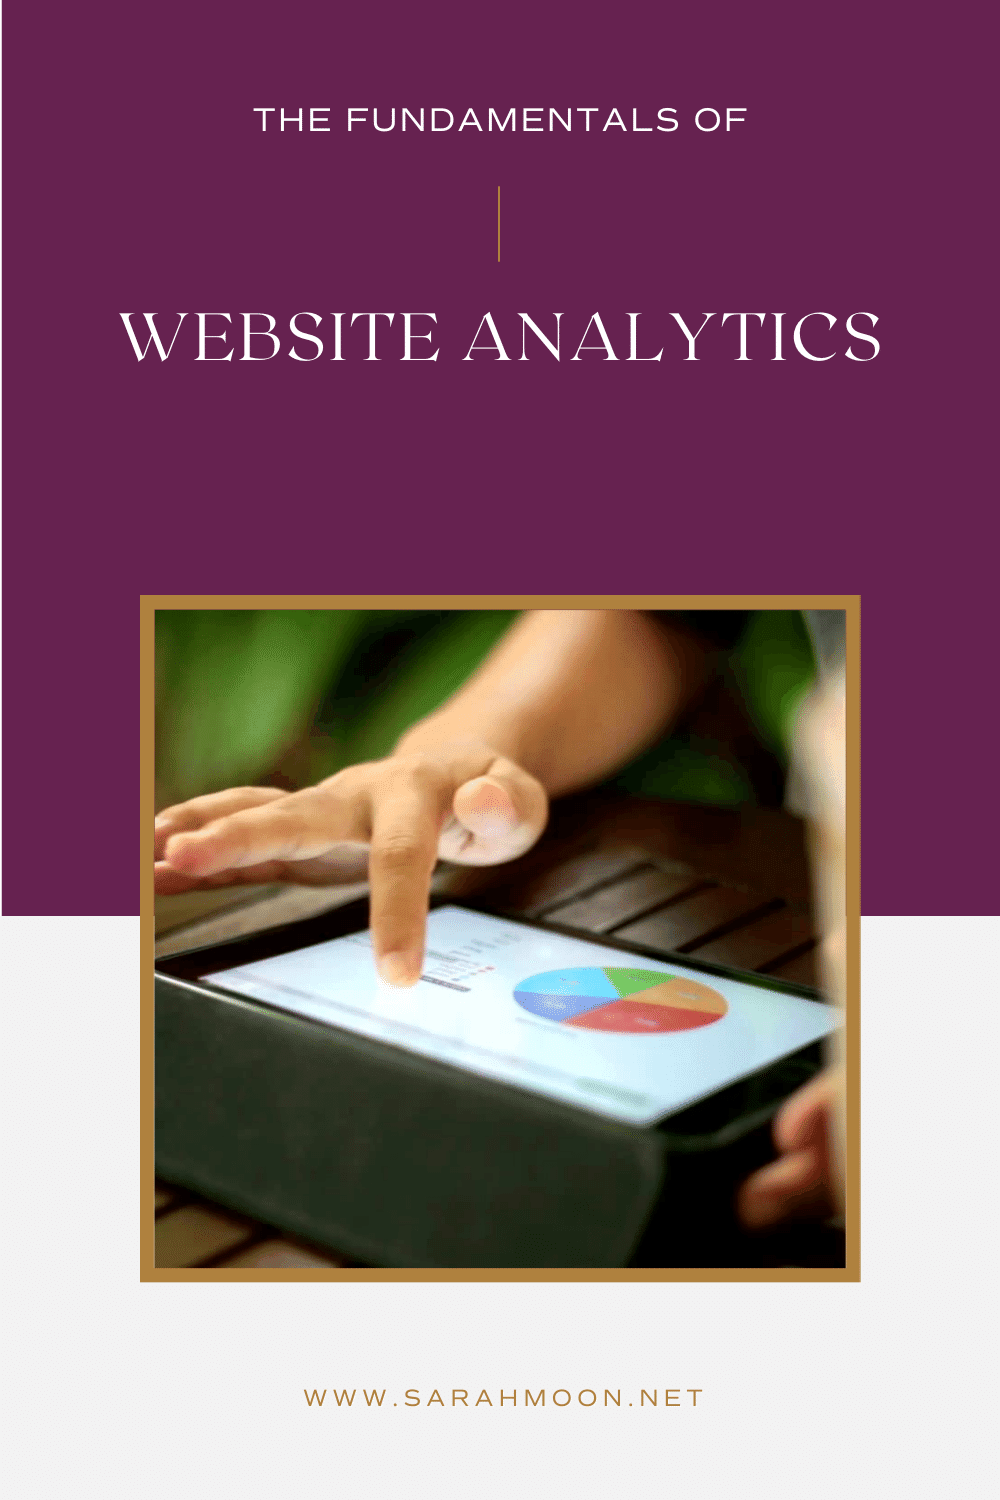 The fundamentals of web analytics.